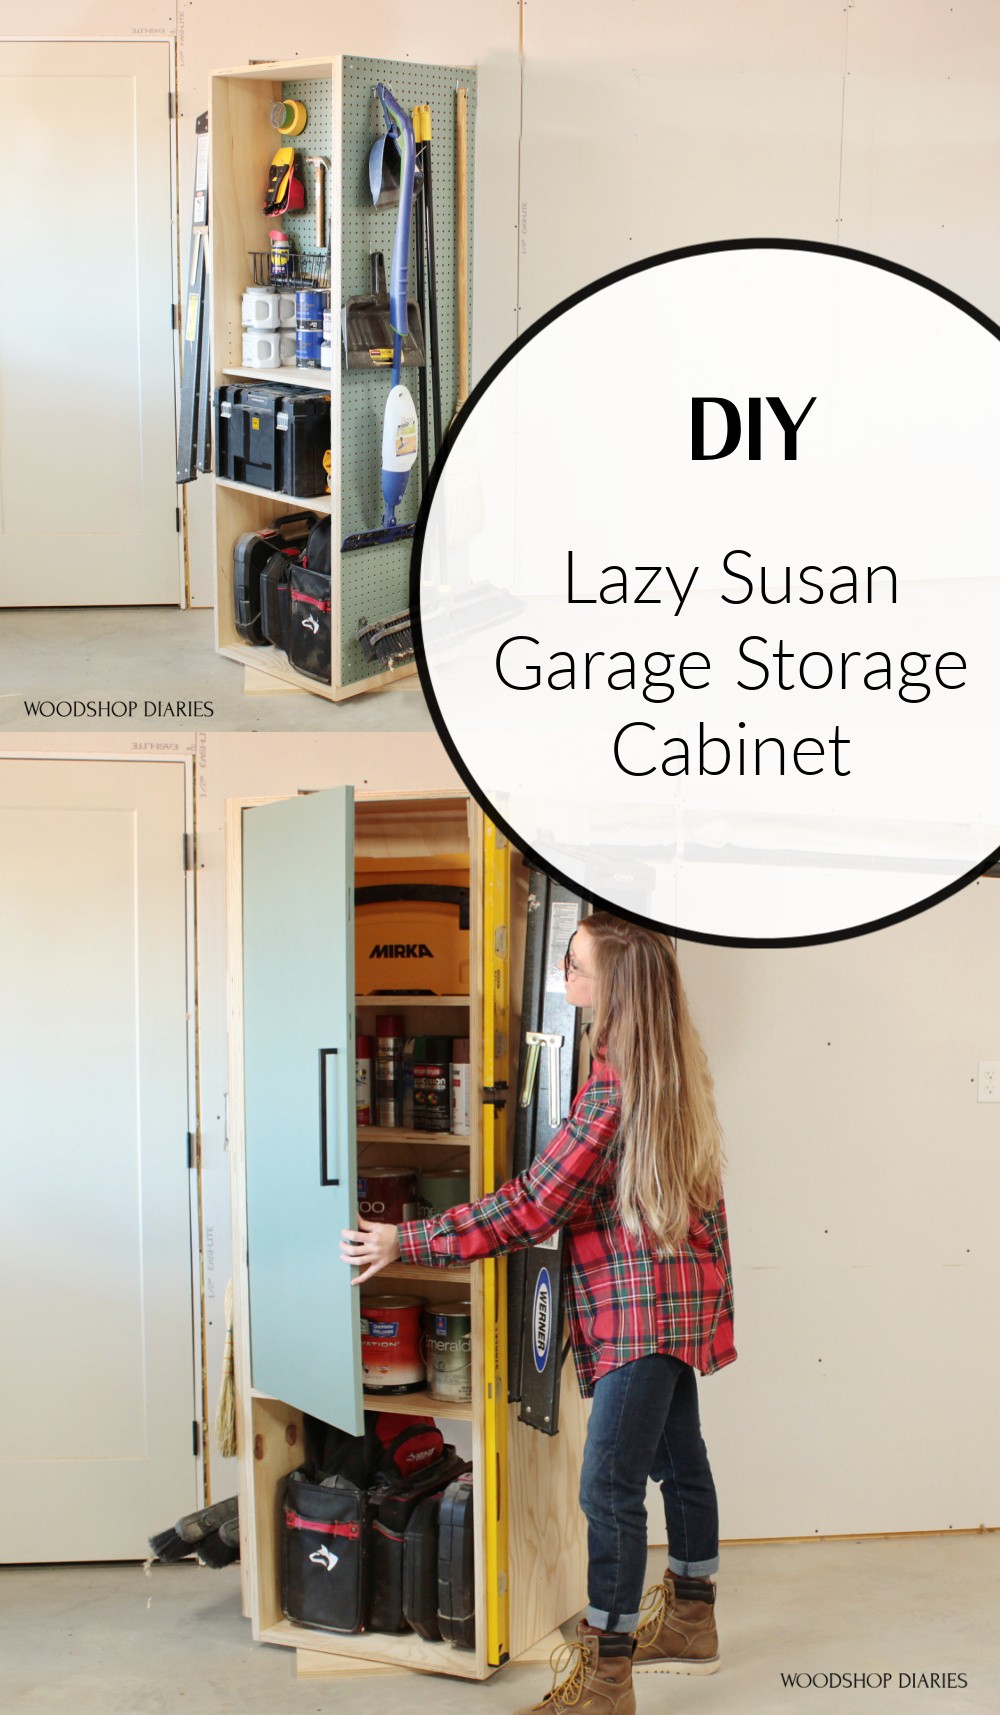 DIY Lazy Susan Garage Storage Cabinet Pinterest collage image with graphic